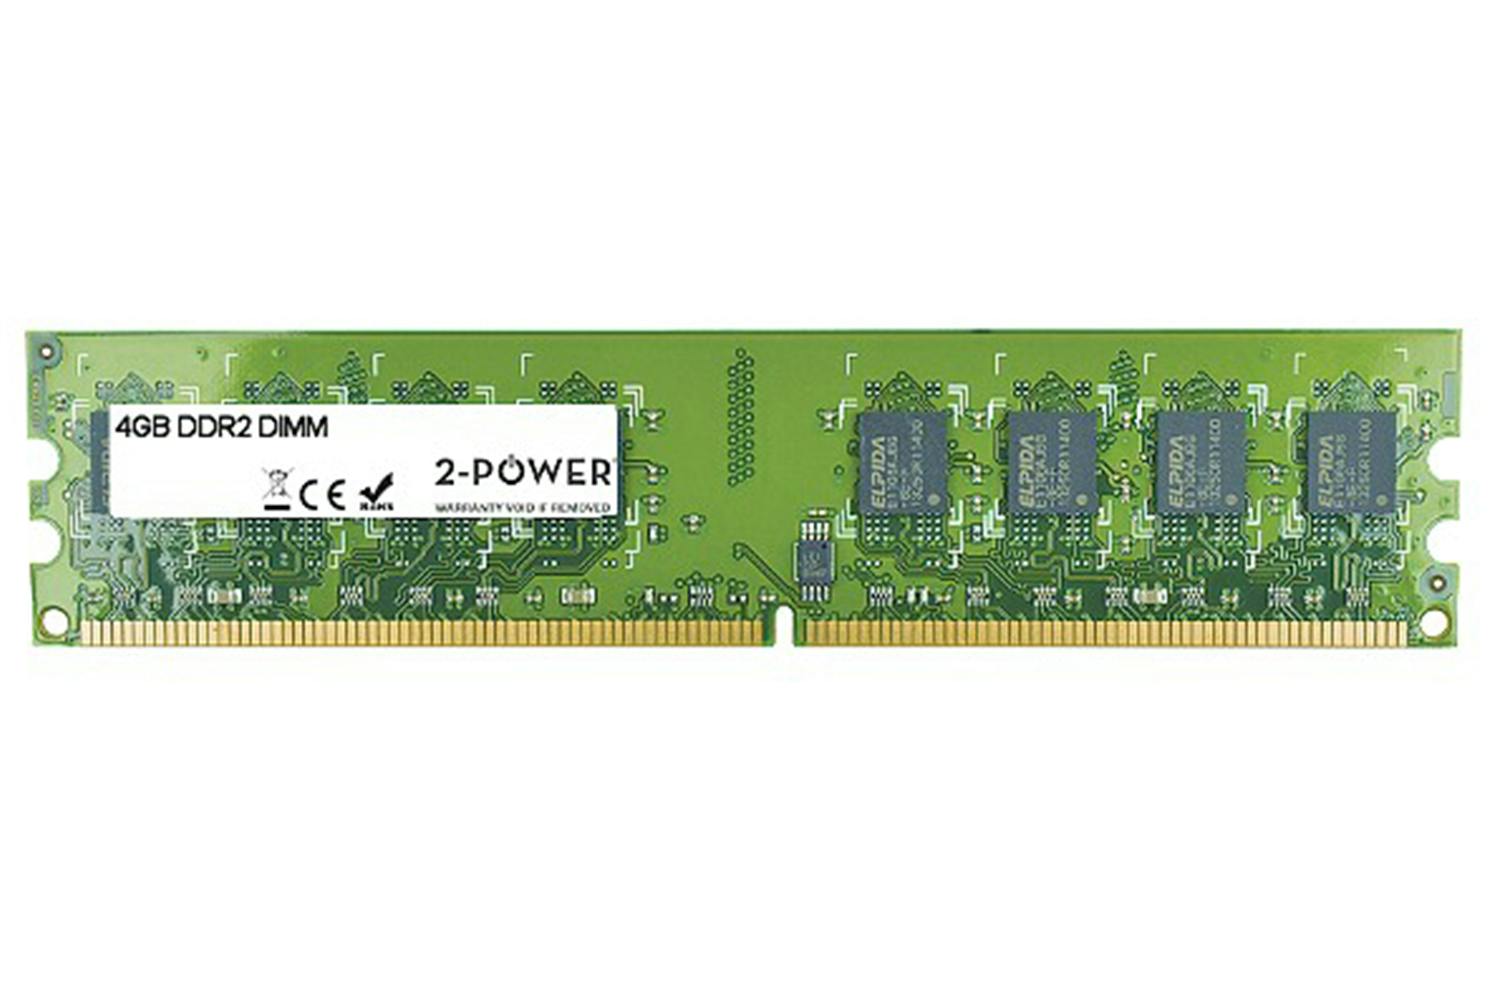 2-Power DDR2 800MHz DIMM Memory Module | 4GB